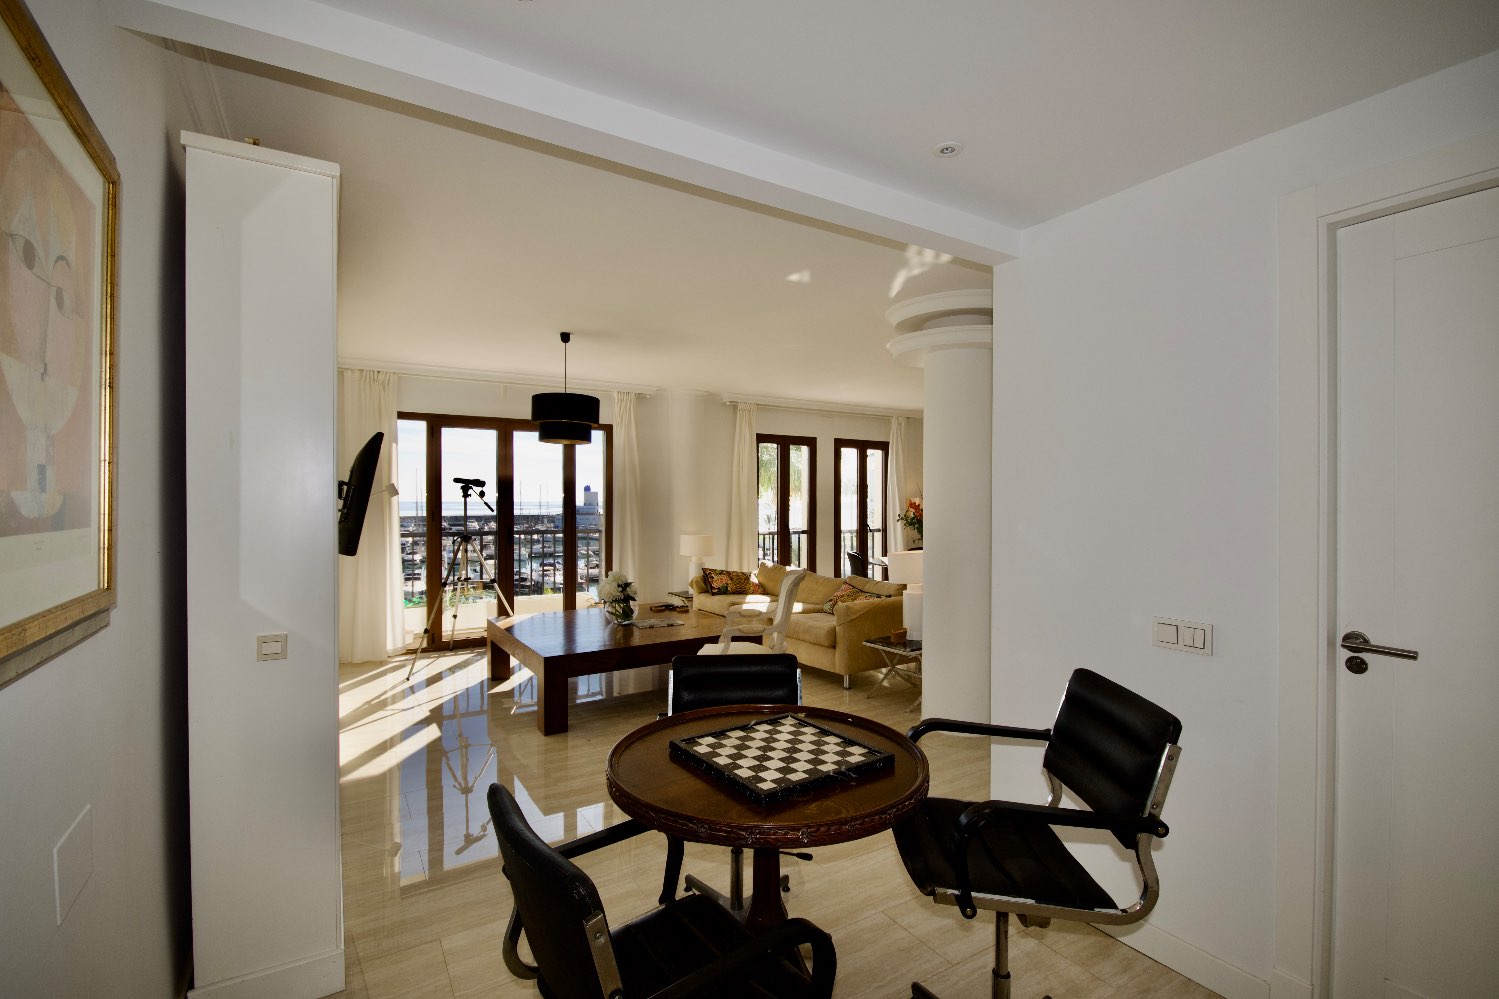 Duplex-Penthouse zum Verkauf in der 1. Linie von Puerto de la Duquesa - Manilva - Málaga - Costa del Sol